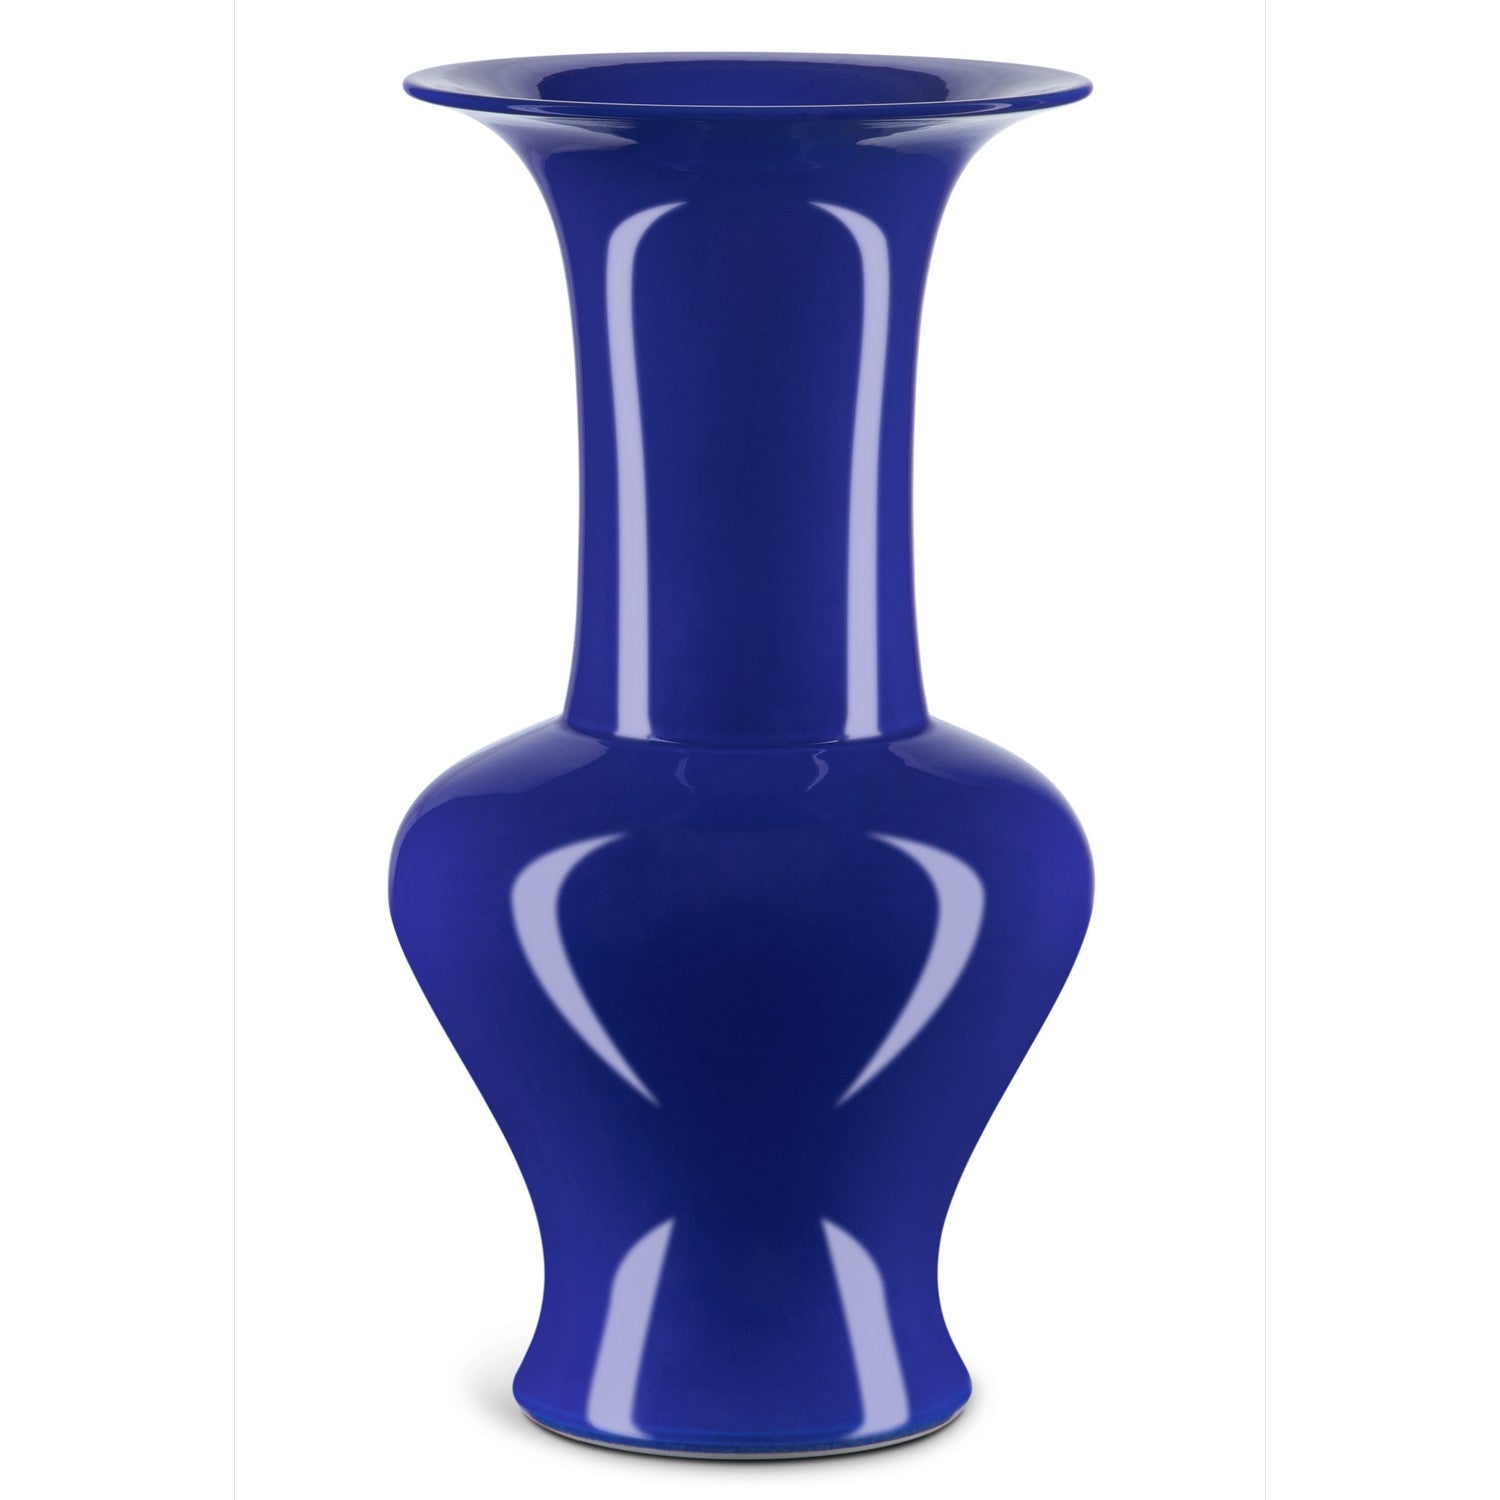 Currey and Company - 1200-0695 - Vase - Ocean Blue